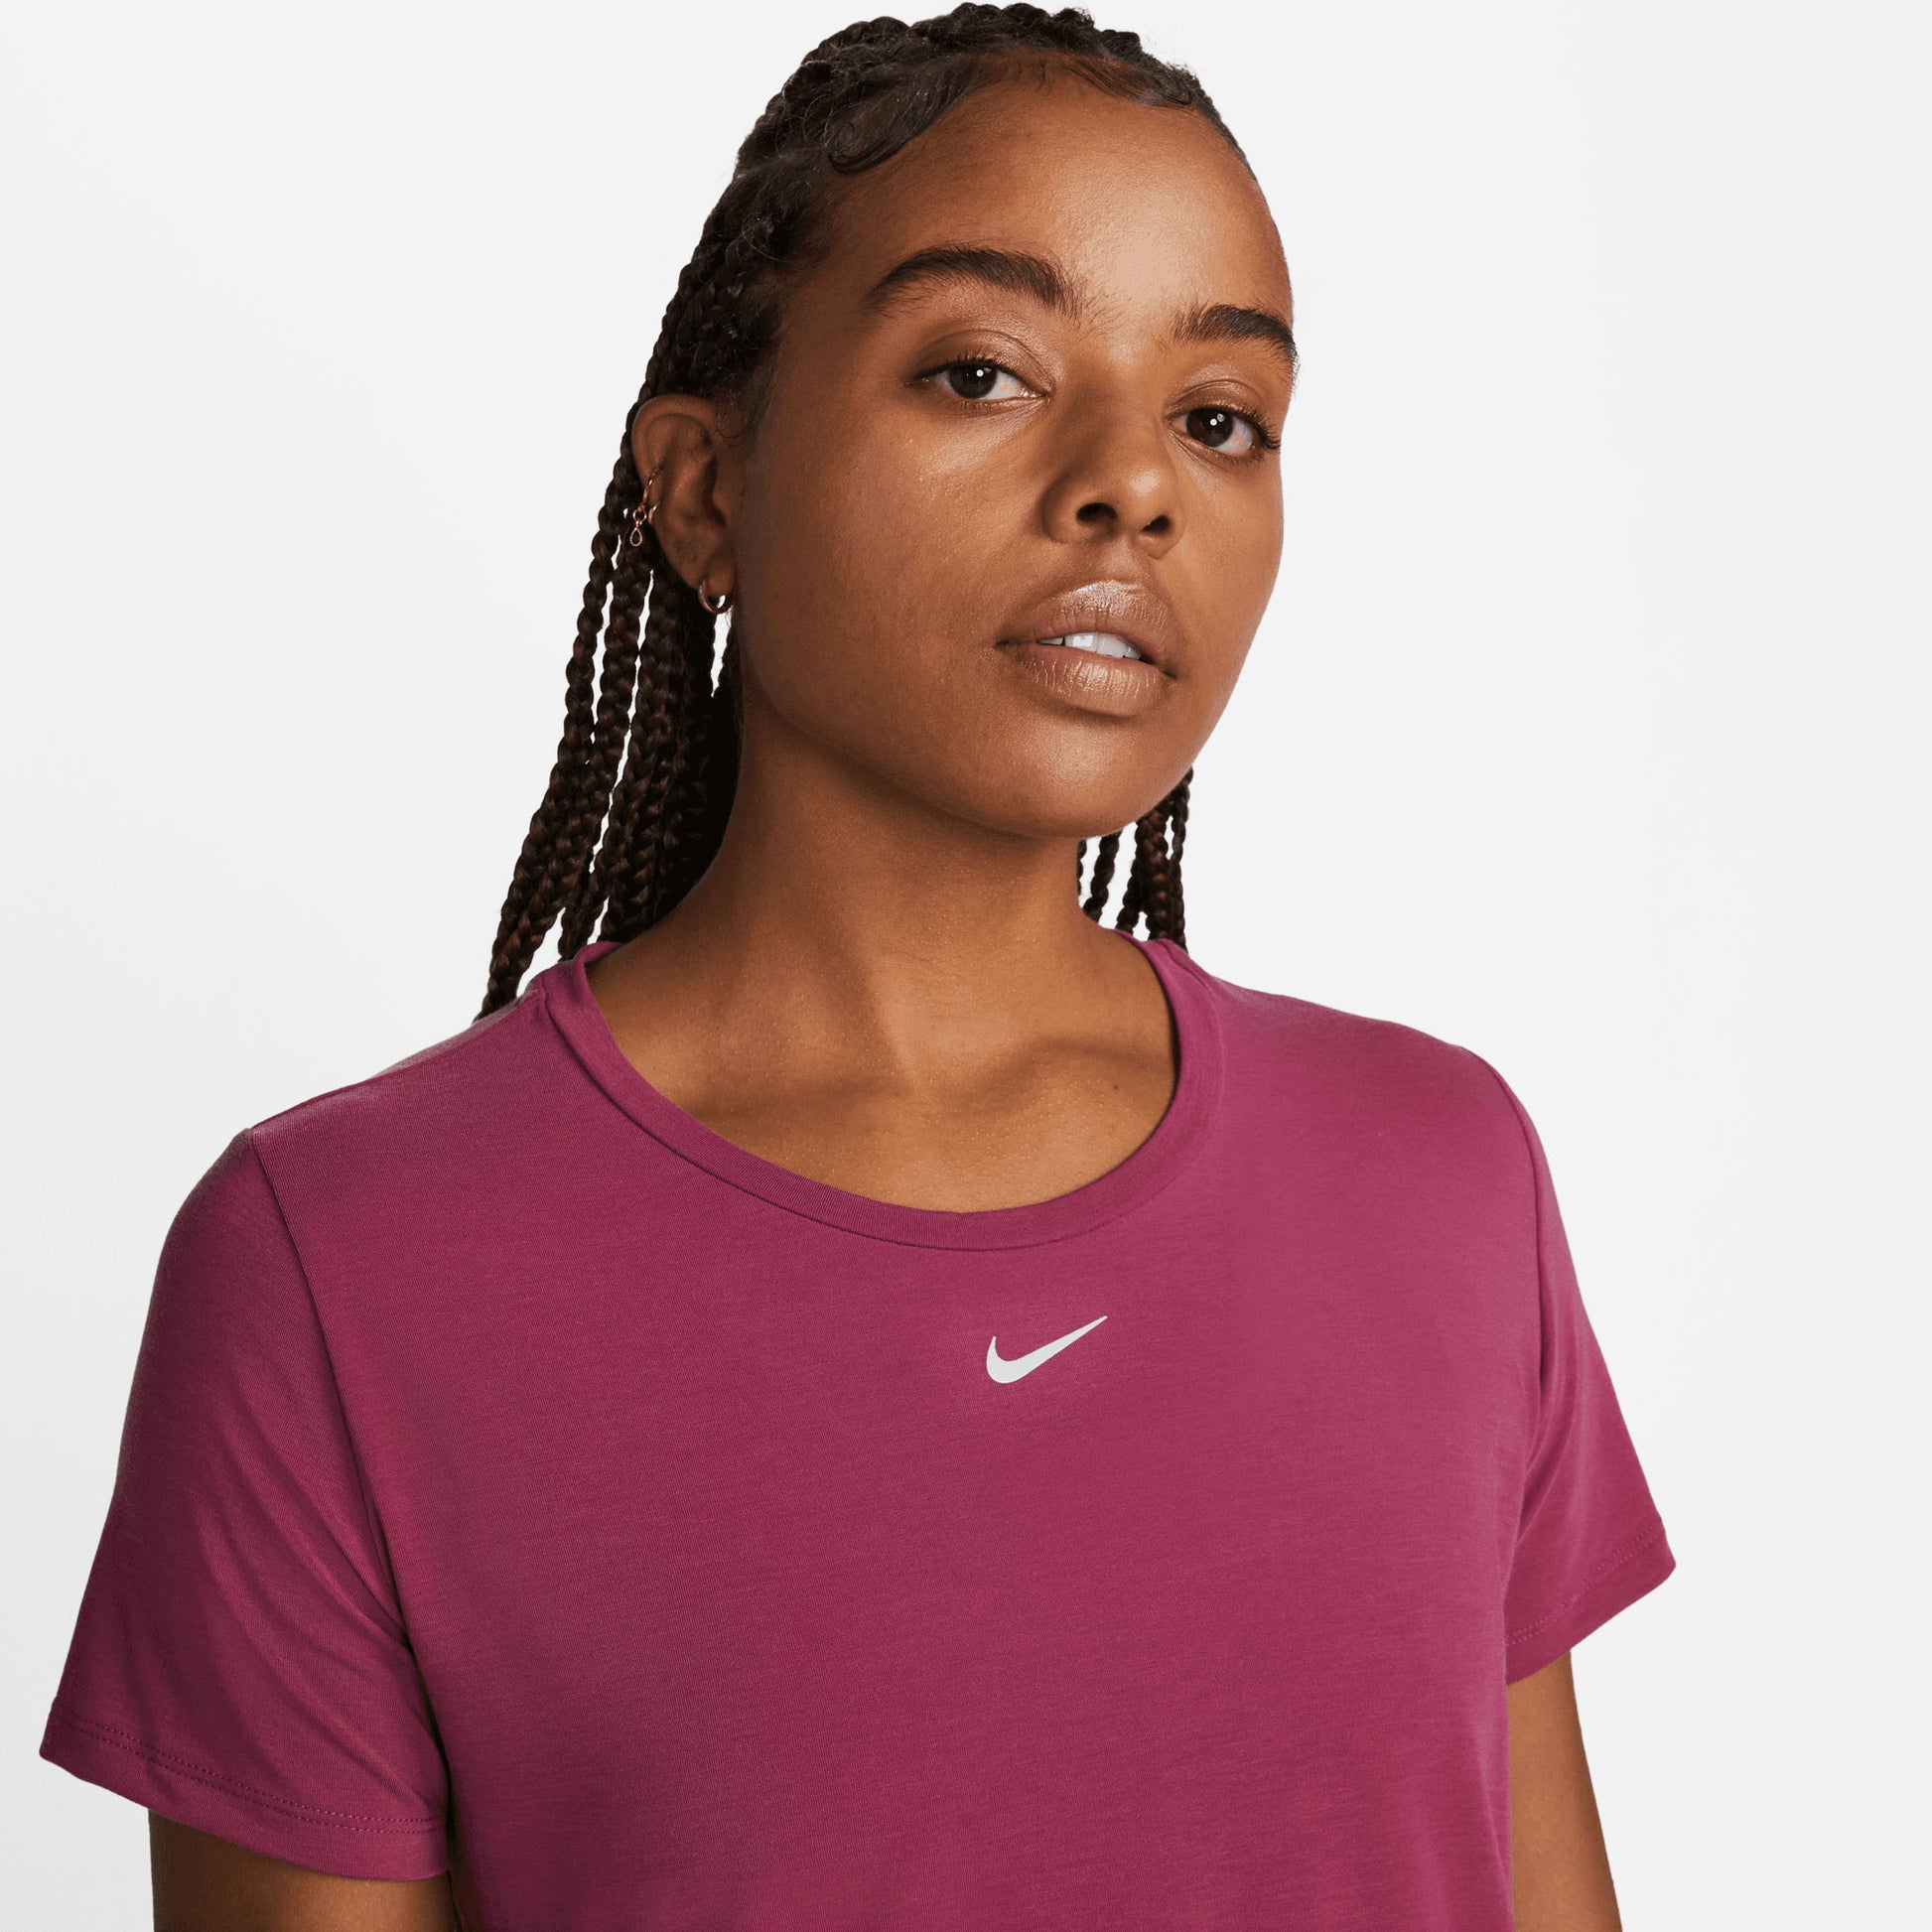 extreem Verzadigen Inspectie Nike One Luxe Dri-FIT Dames Standaard Fit Shirt Rood - Tennis Only